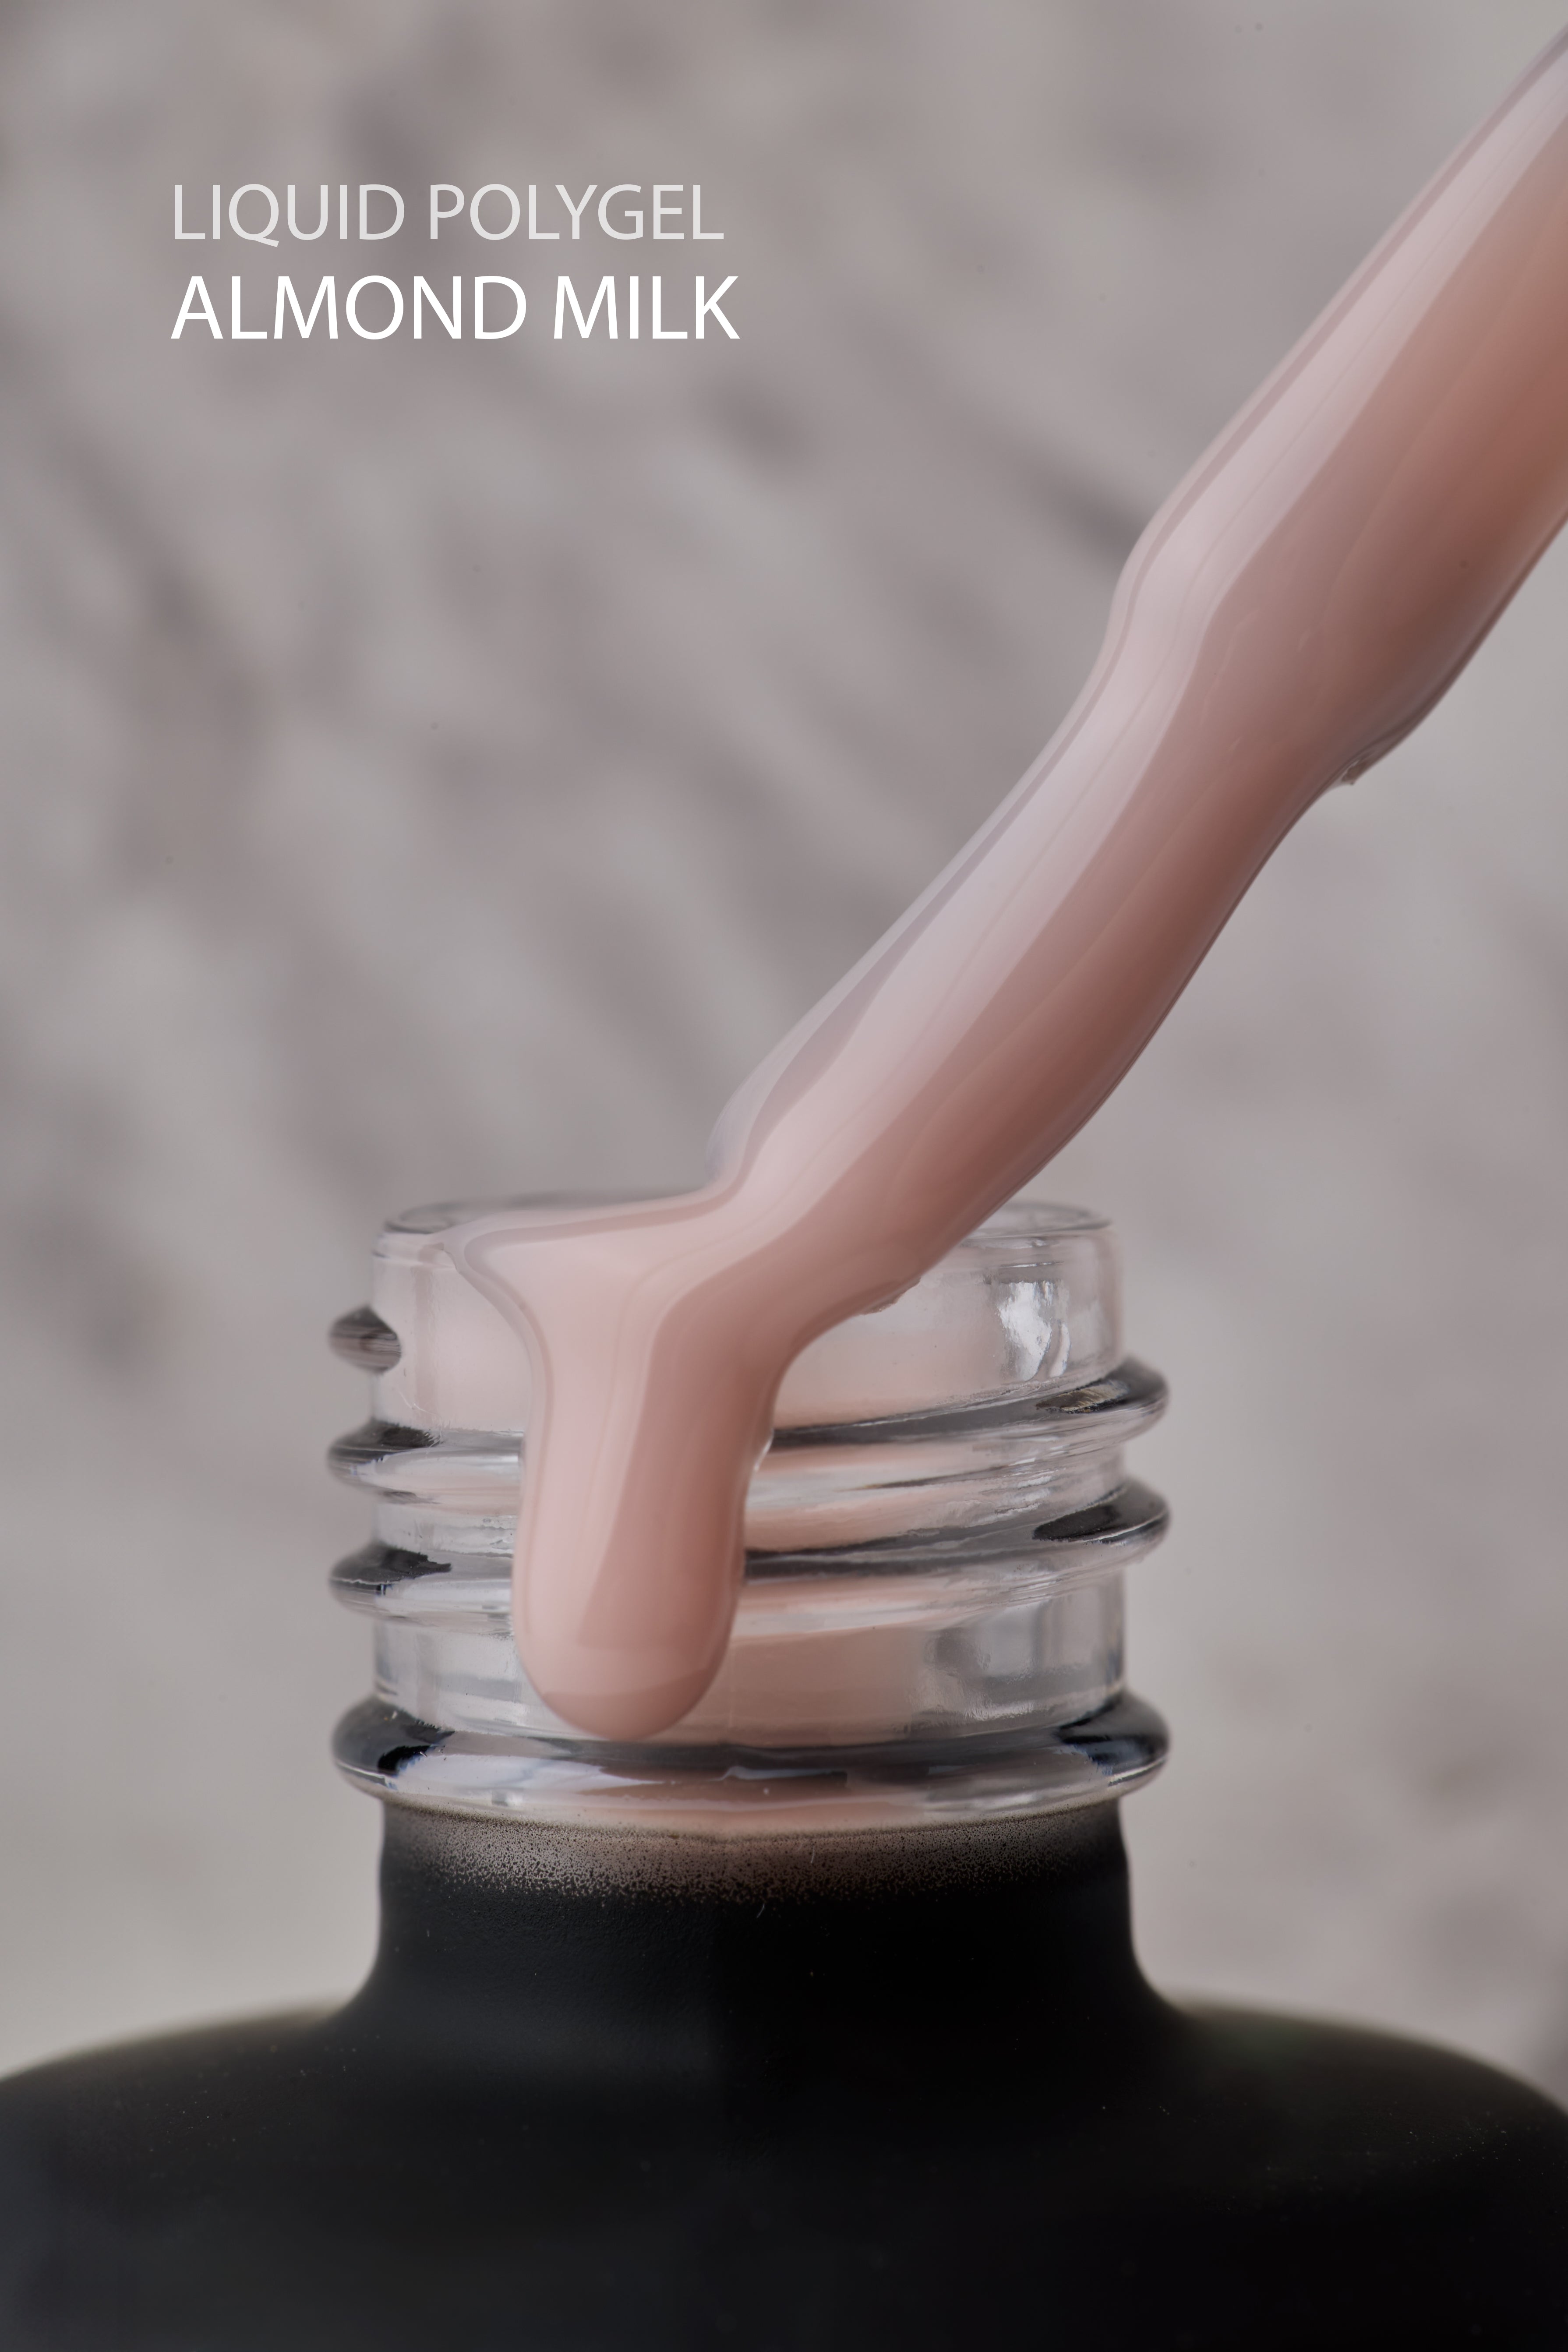 polygel liquide nude almond milk albi - ongles pro 